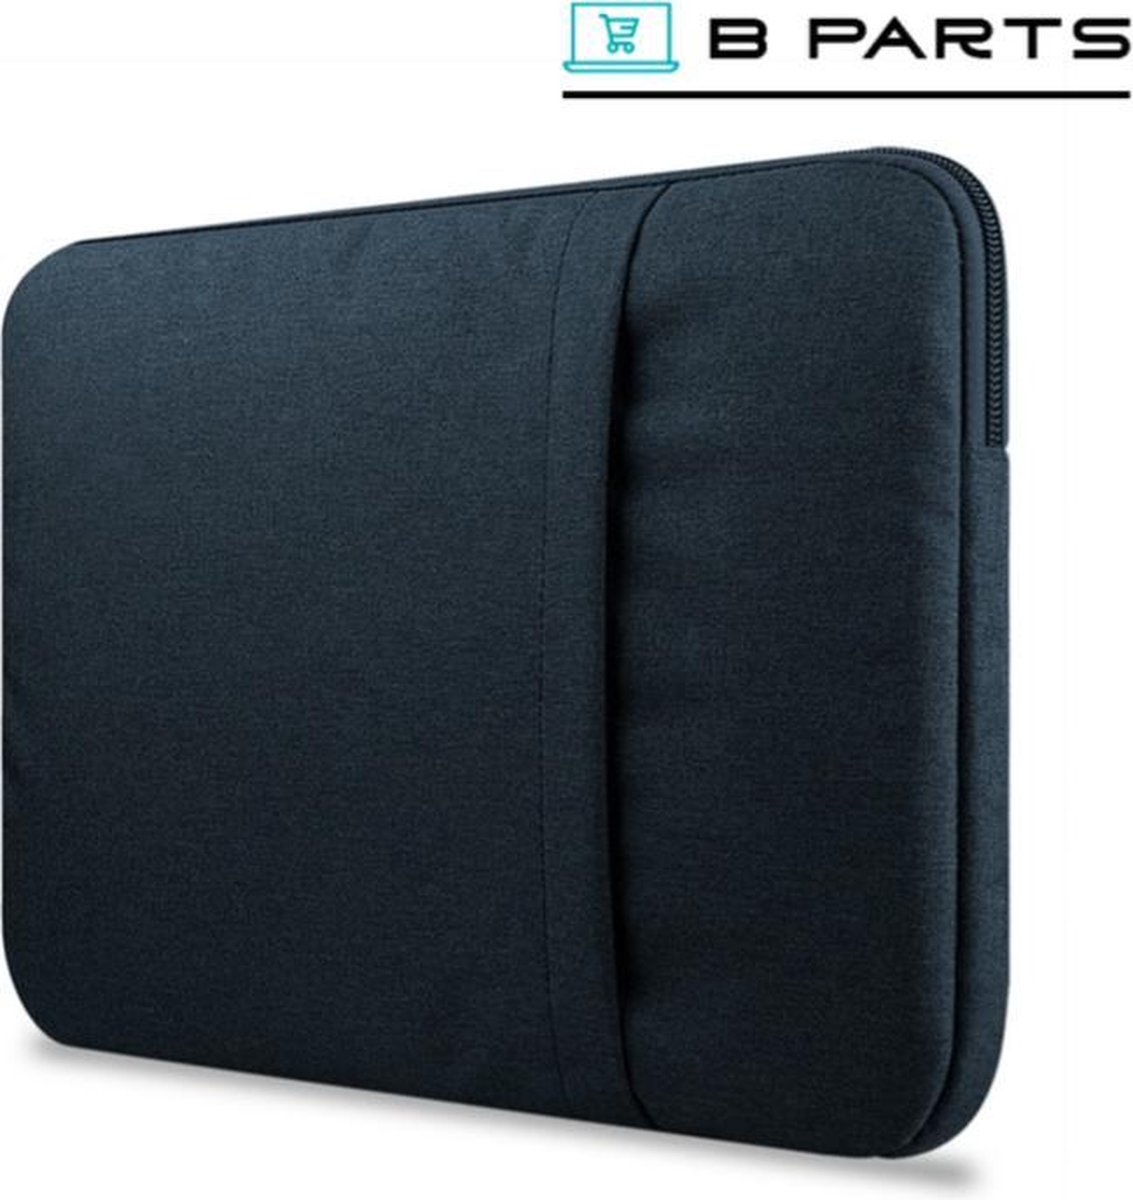 BParts - 13 inch Hoge kwaliteit Laptop sleeve - Beschermhoes laptop - Laptophoes - Extra zachte binnenkant - Donkerblauw